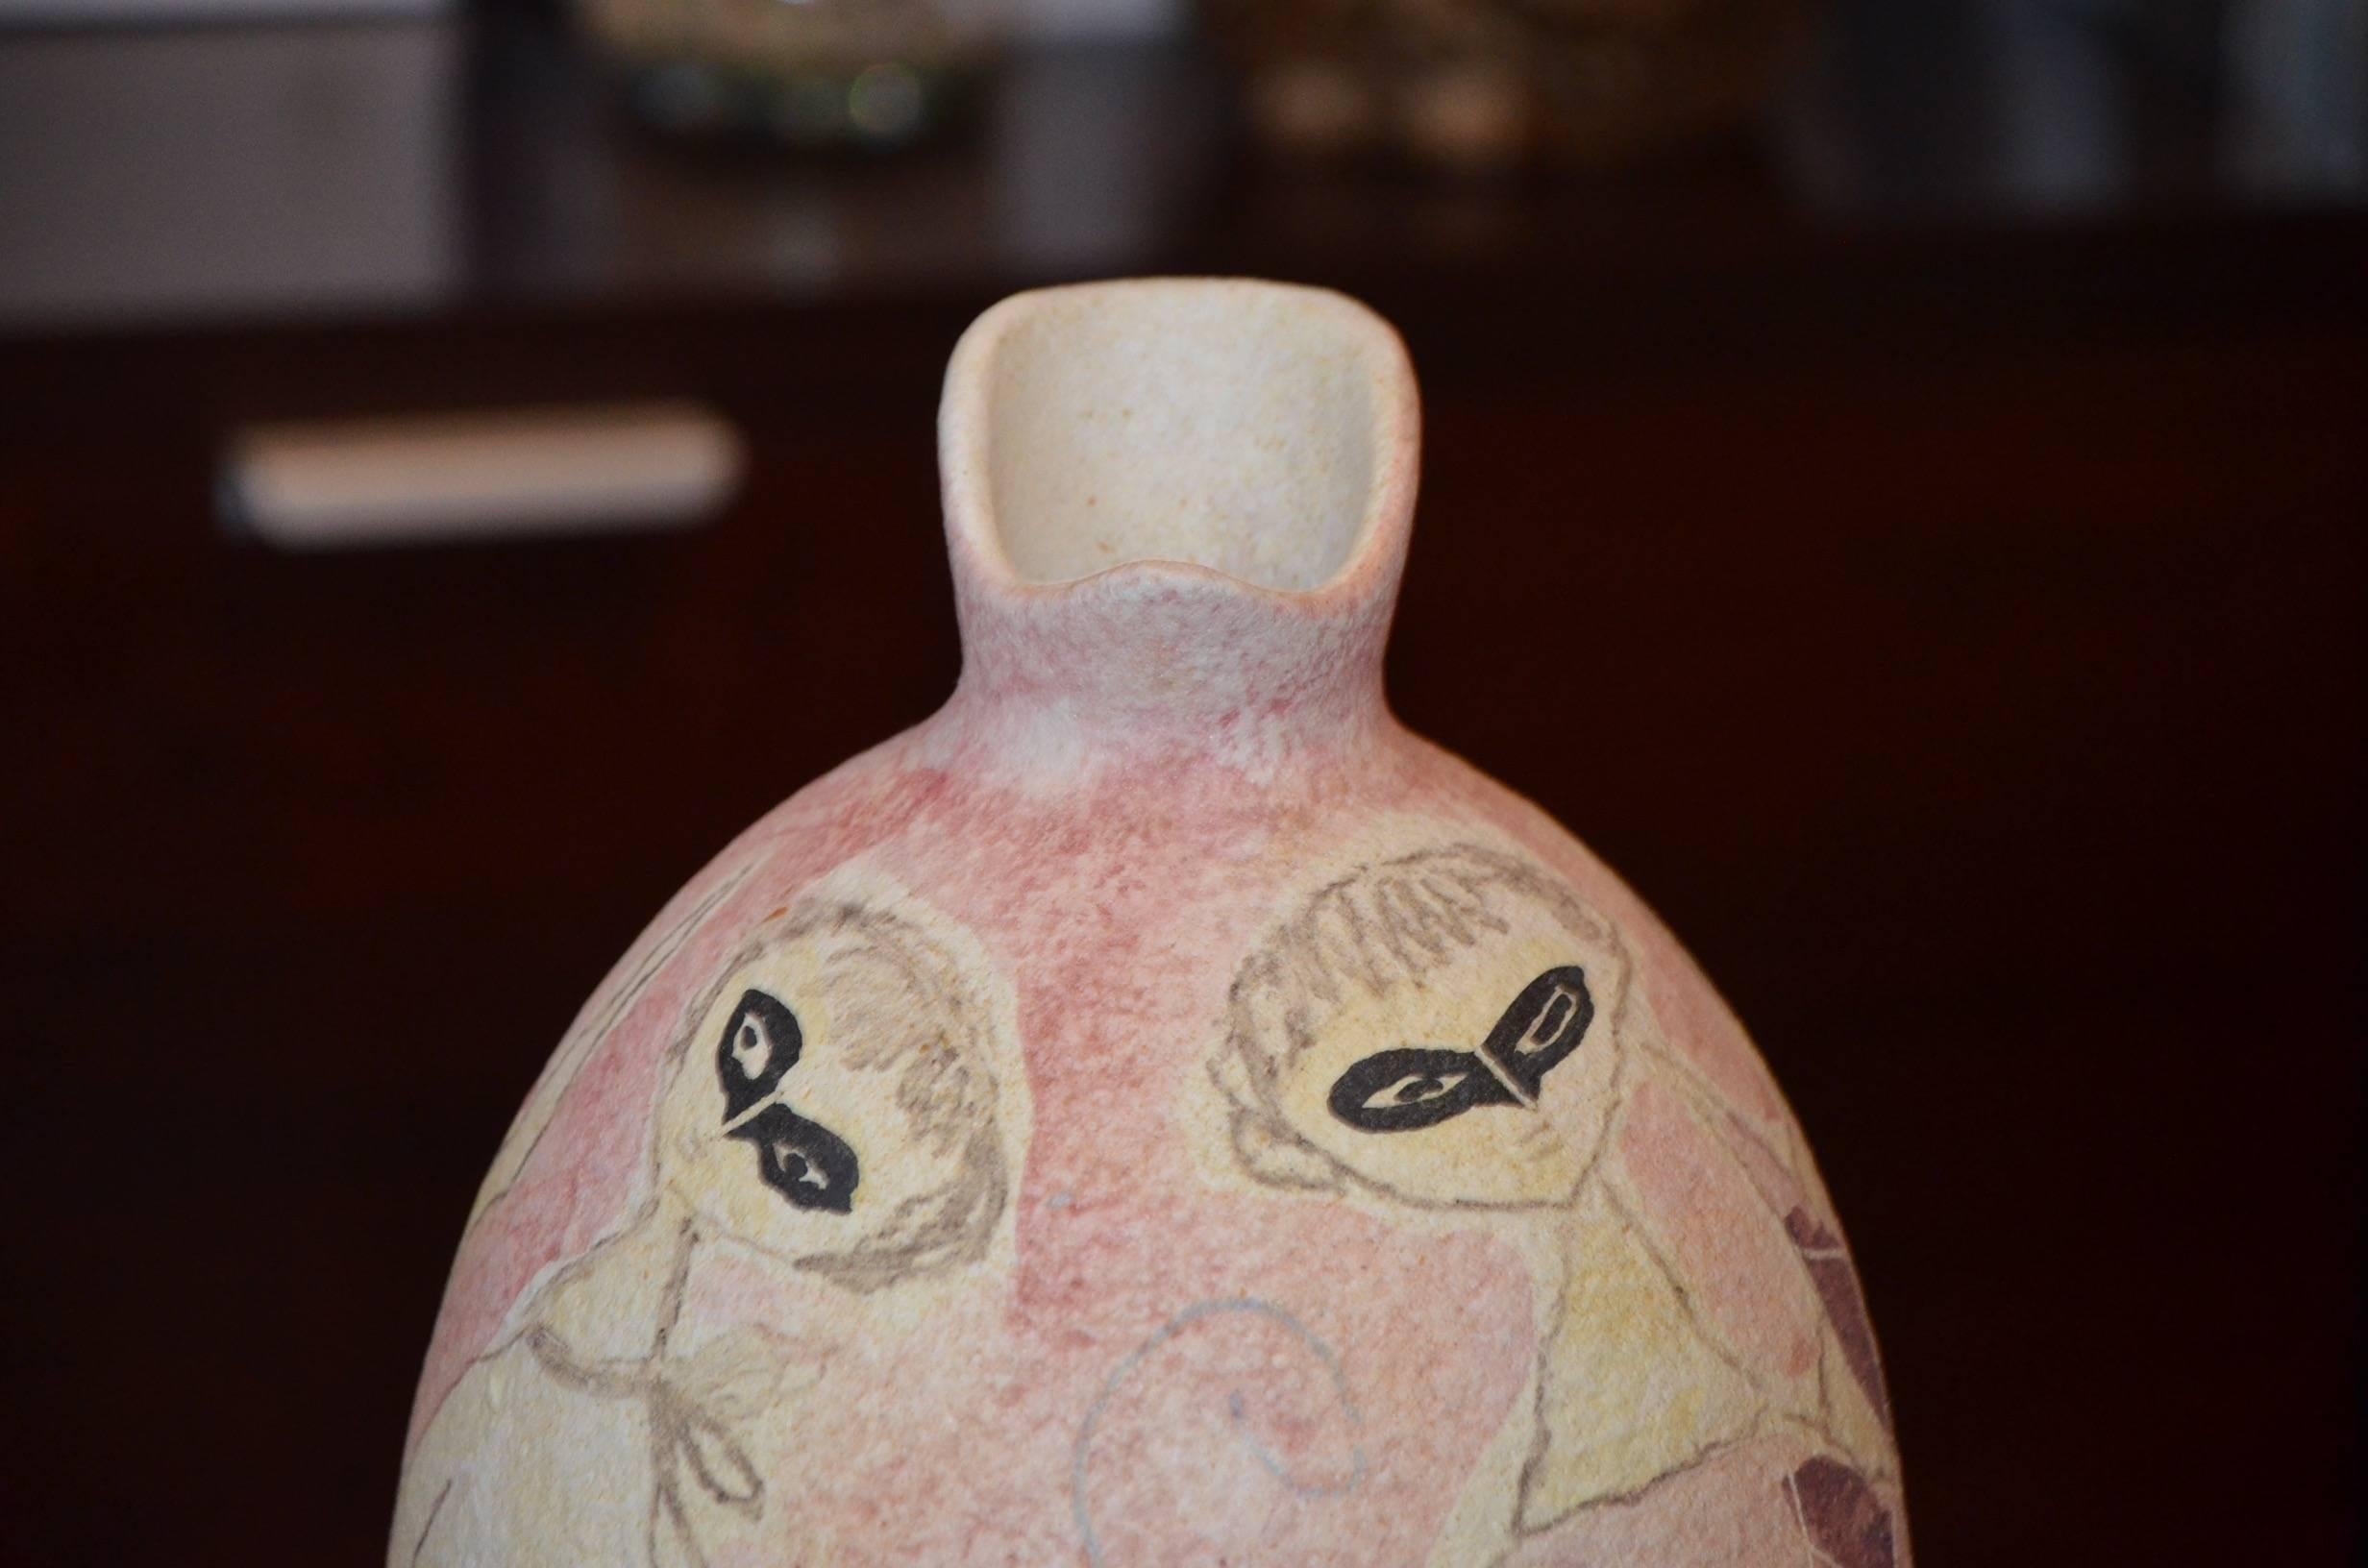 Amazing Mid-Century Modern Marcello Fantoni pottery vase with stylized figures.
Vase measures 30.5cm (12